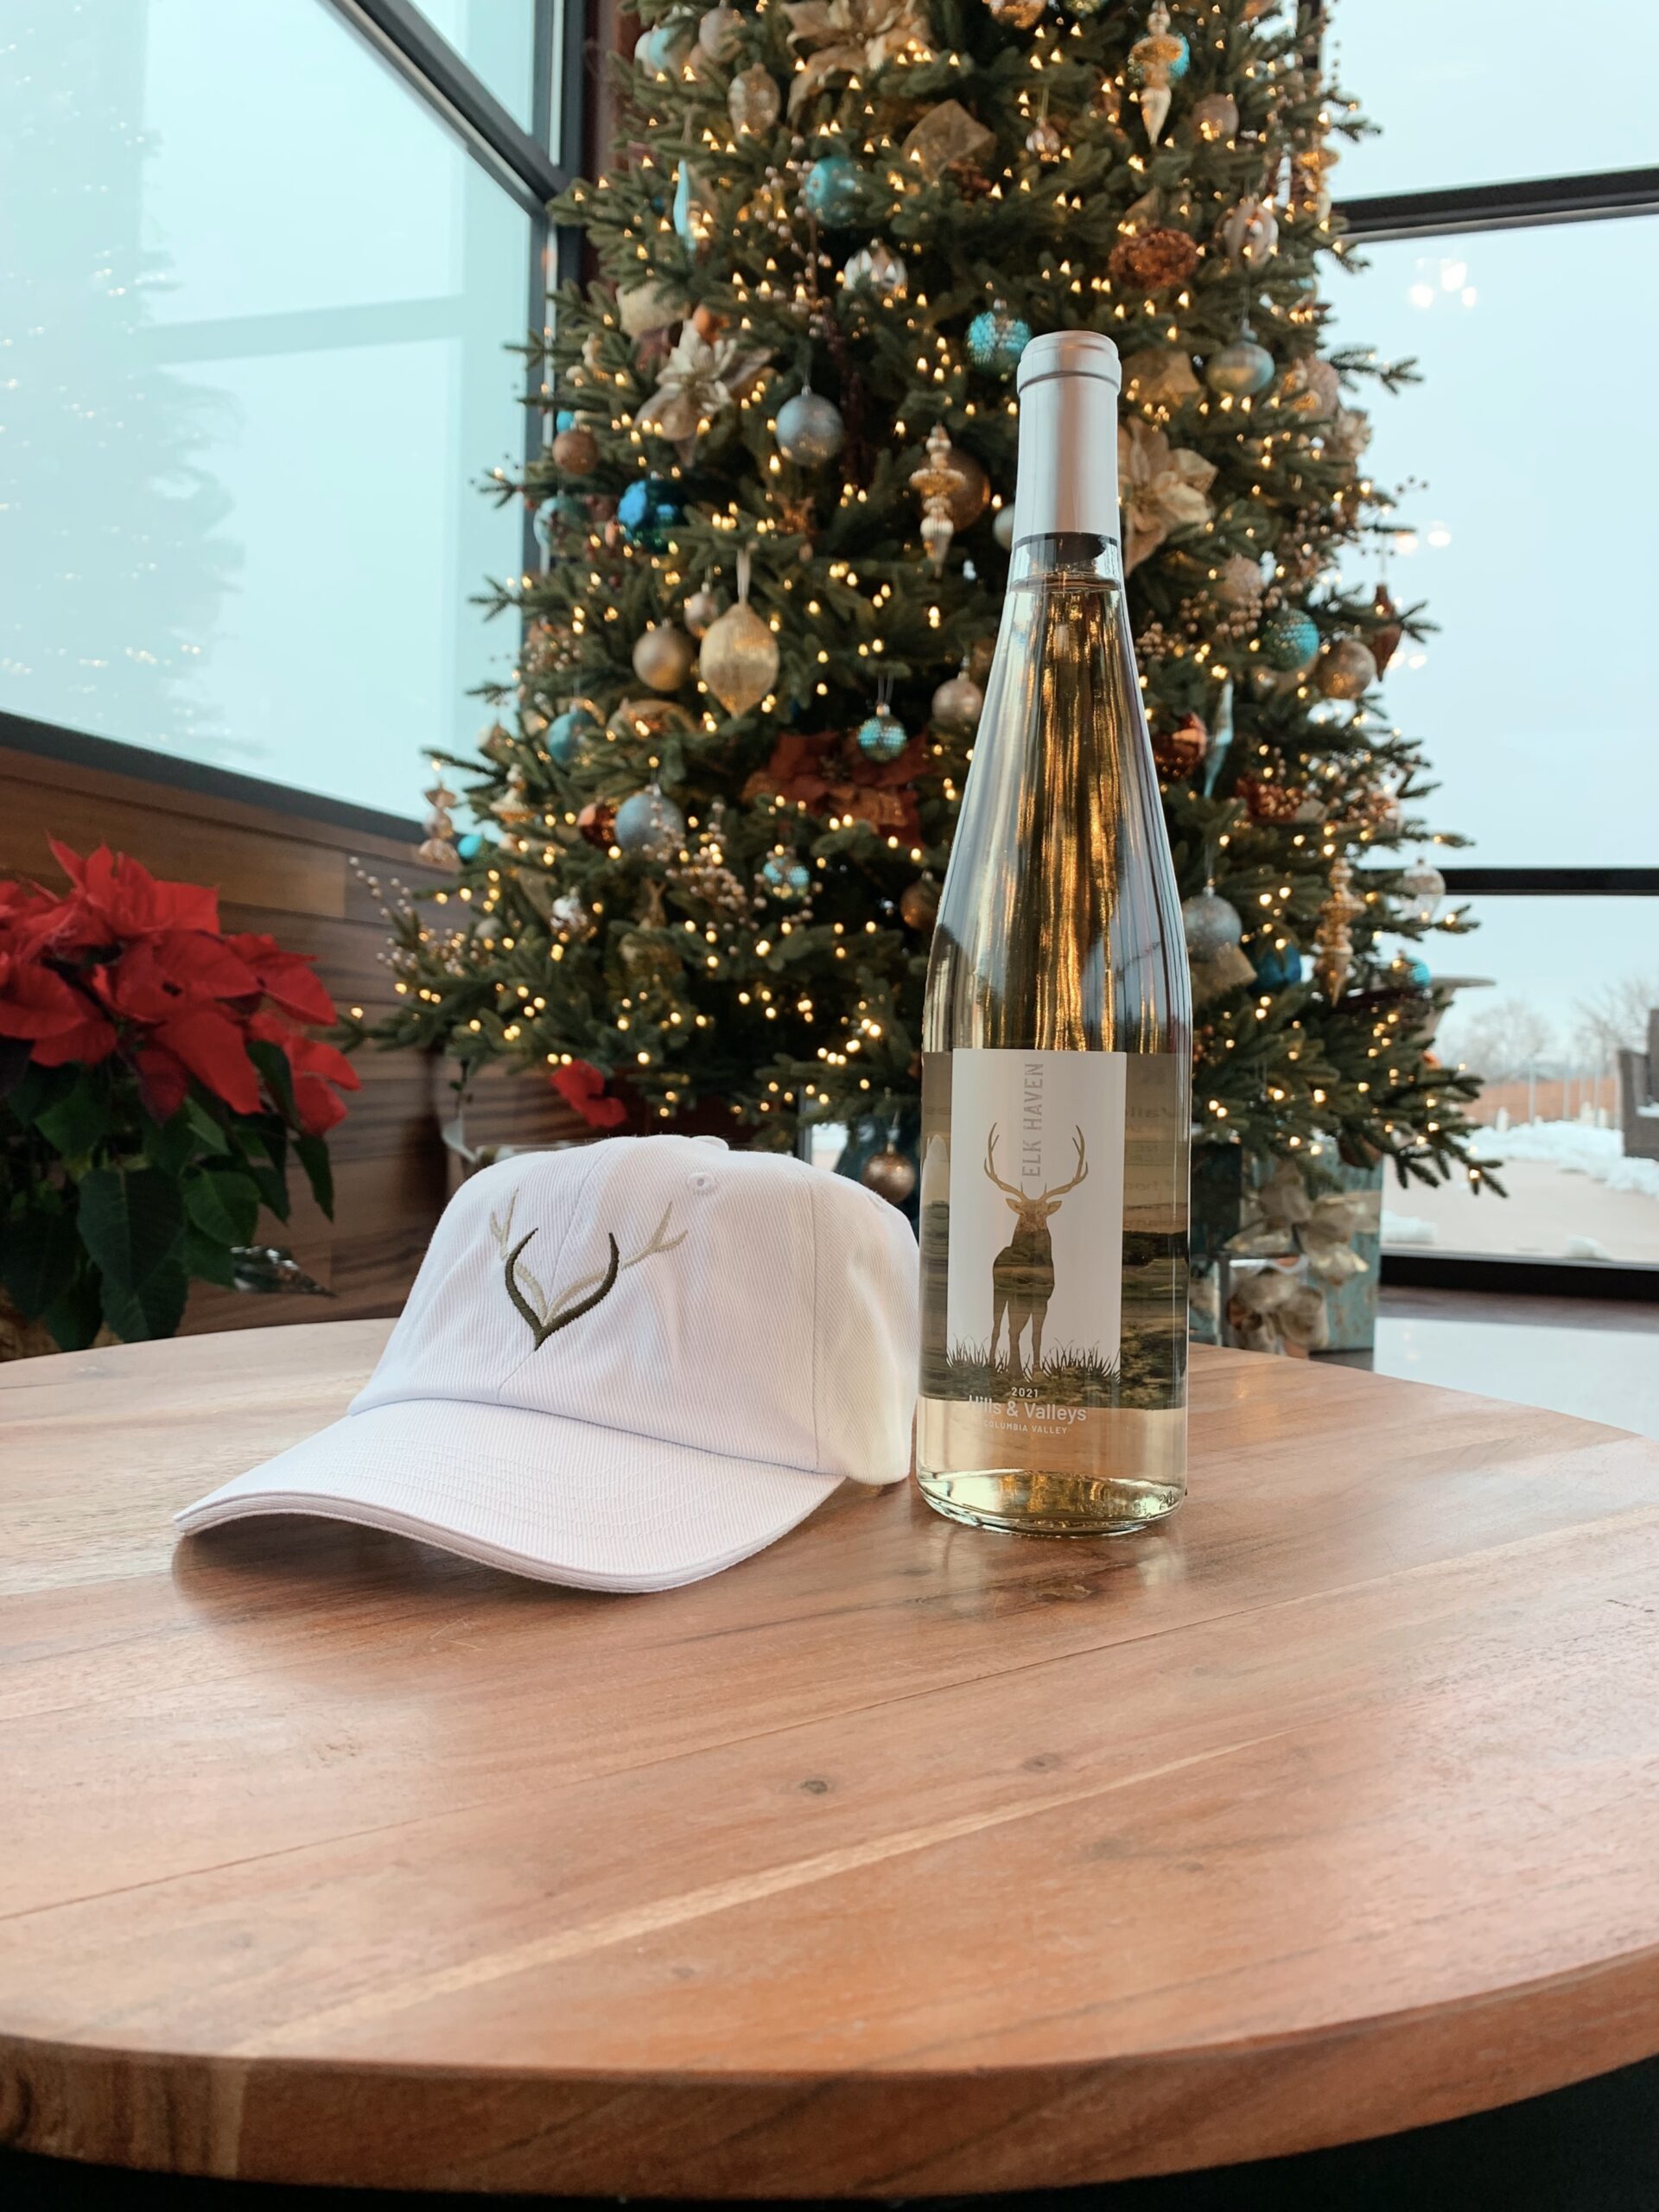 white baseball cap with elk haven logo sitting next to wine bottle